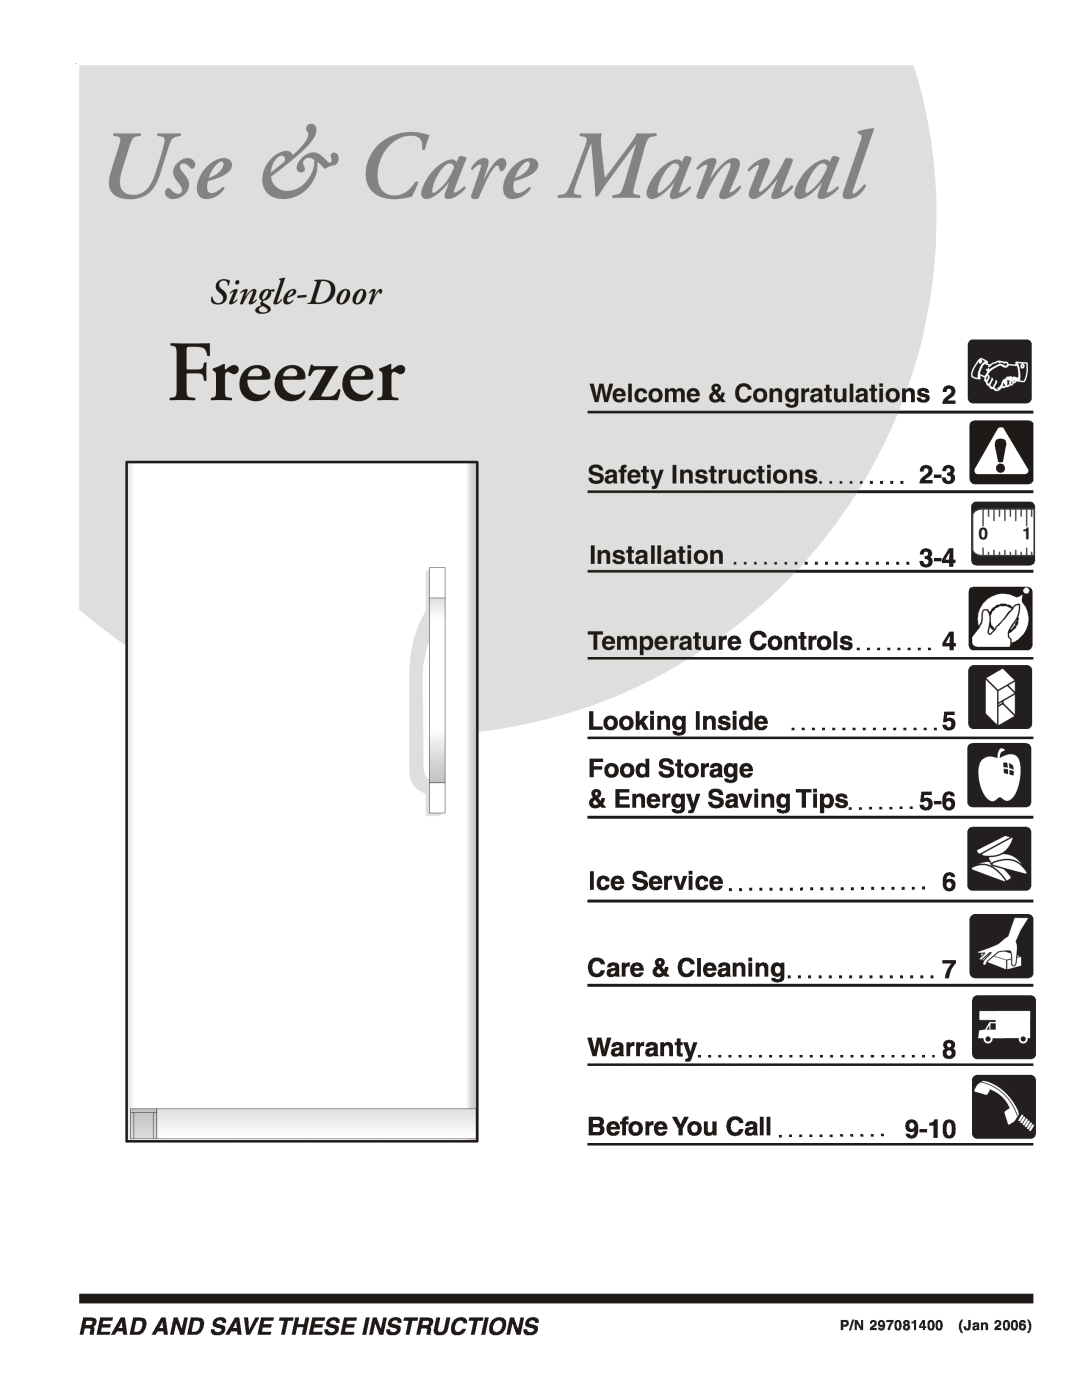 Sears Freezer Single-Door warranty Use & Care Manual 